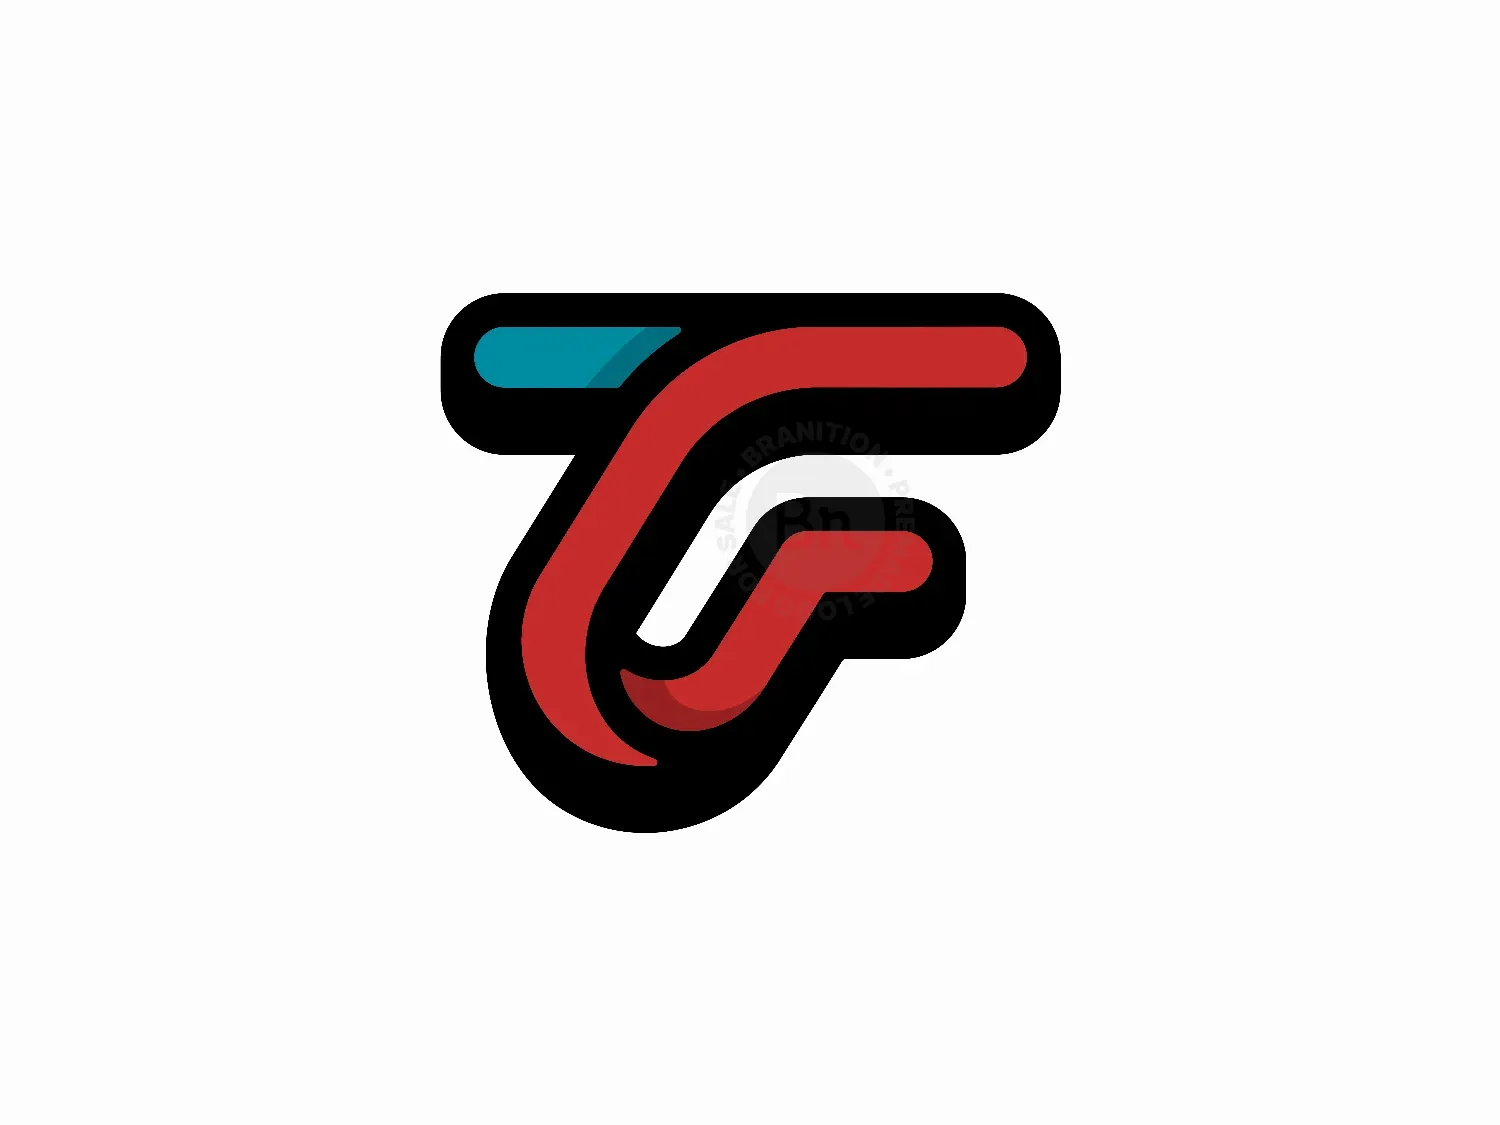 TF Logo Design by Sahil Saifi on Dribbble